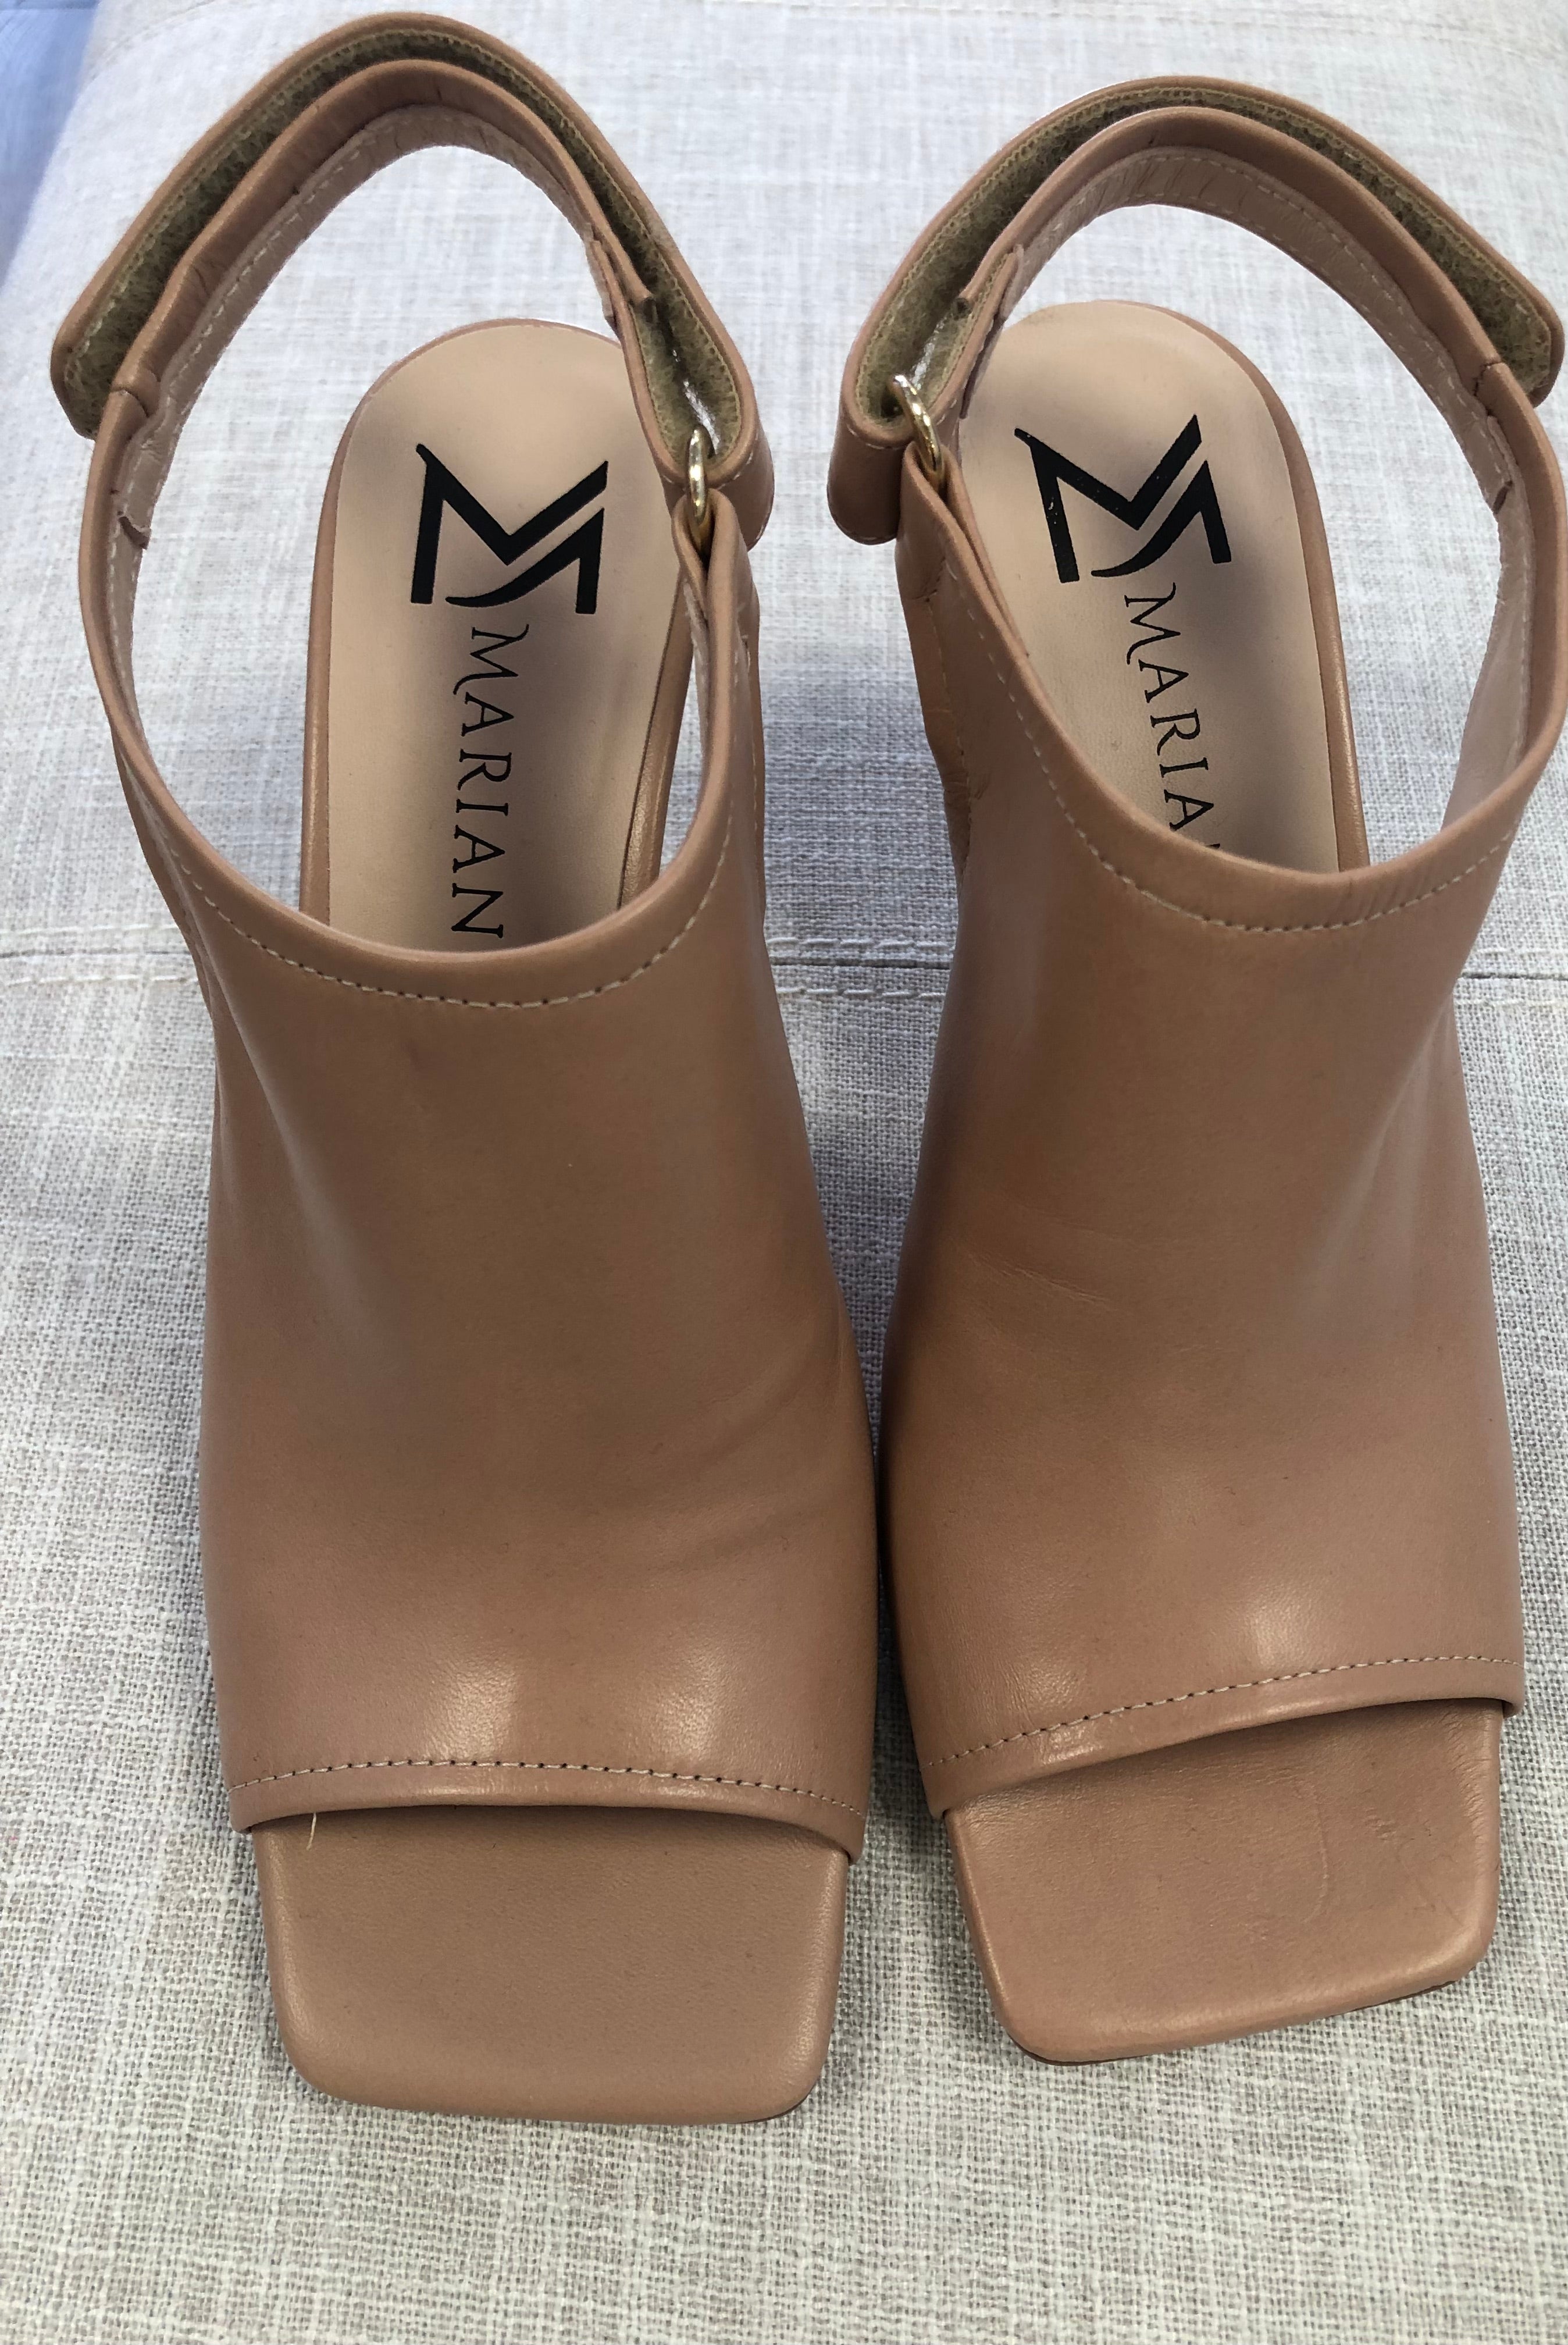 Marian 24056 beige sandal